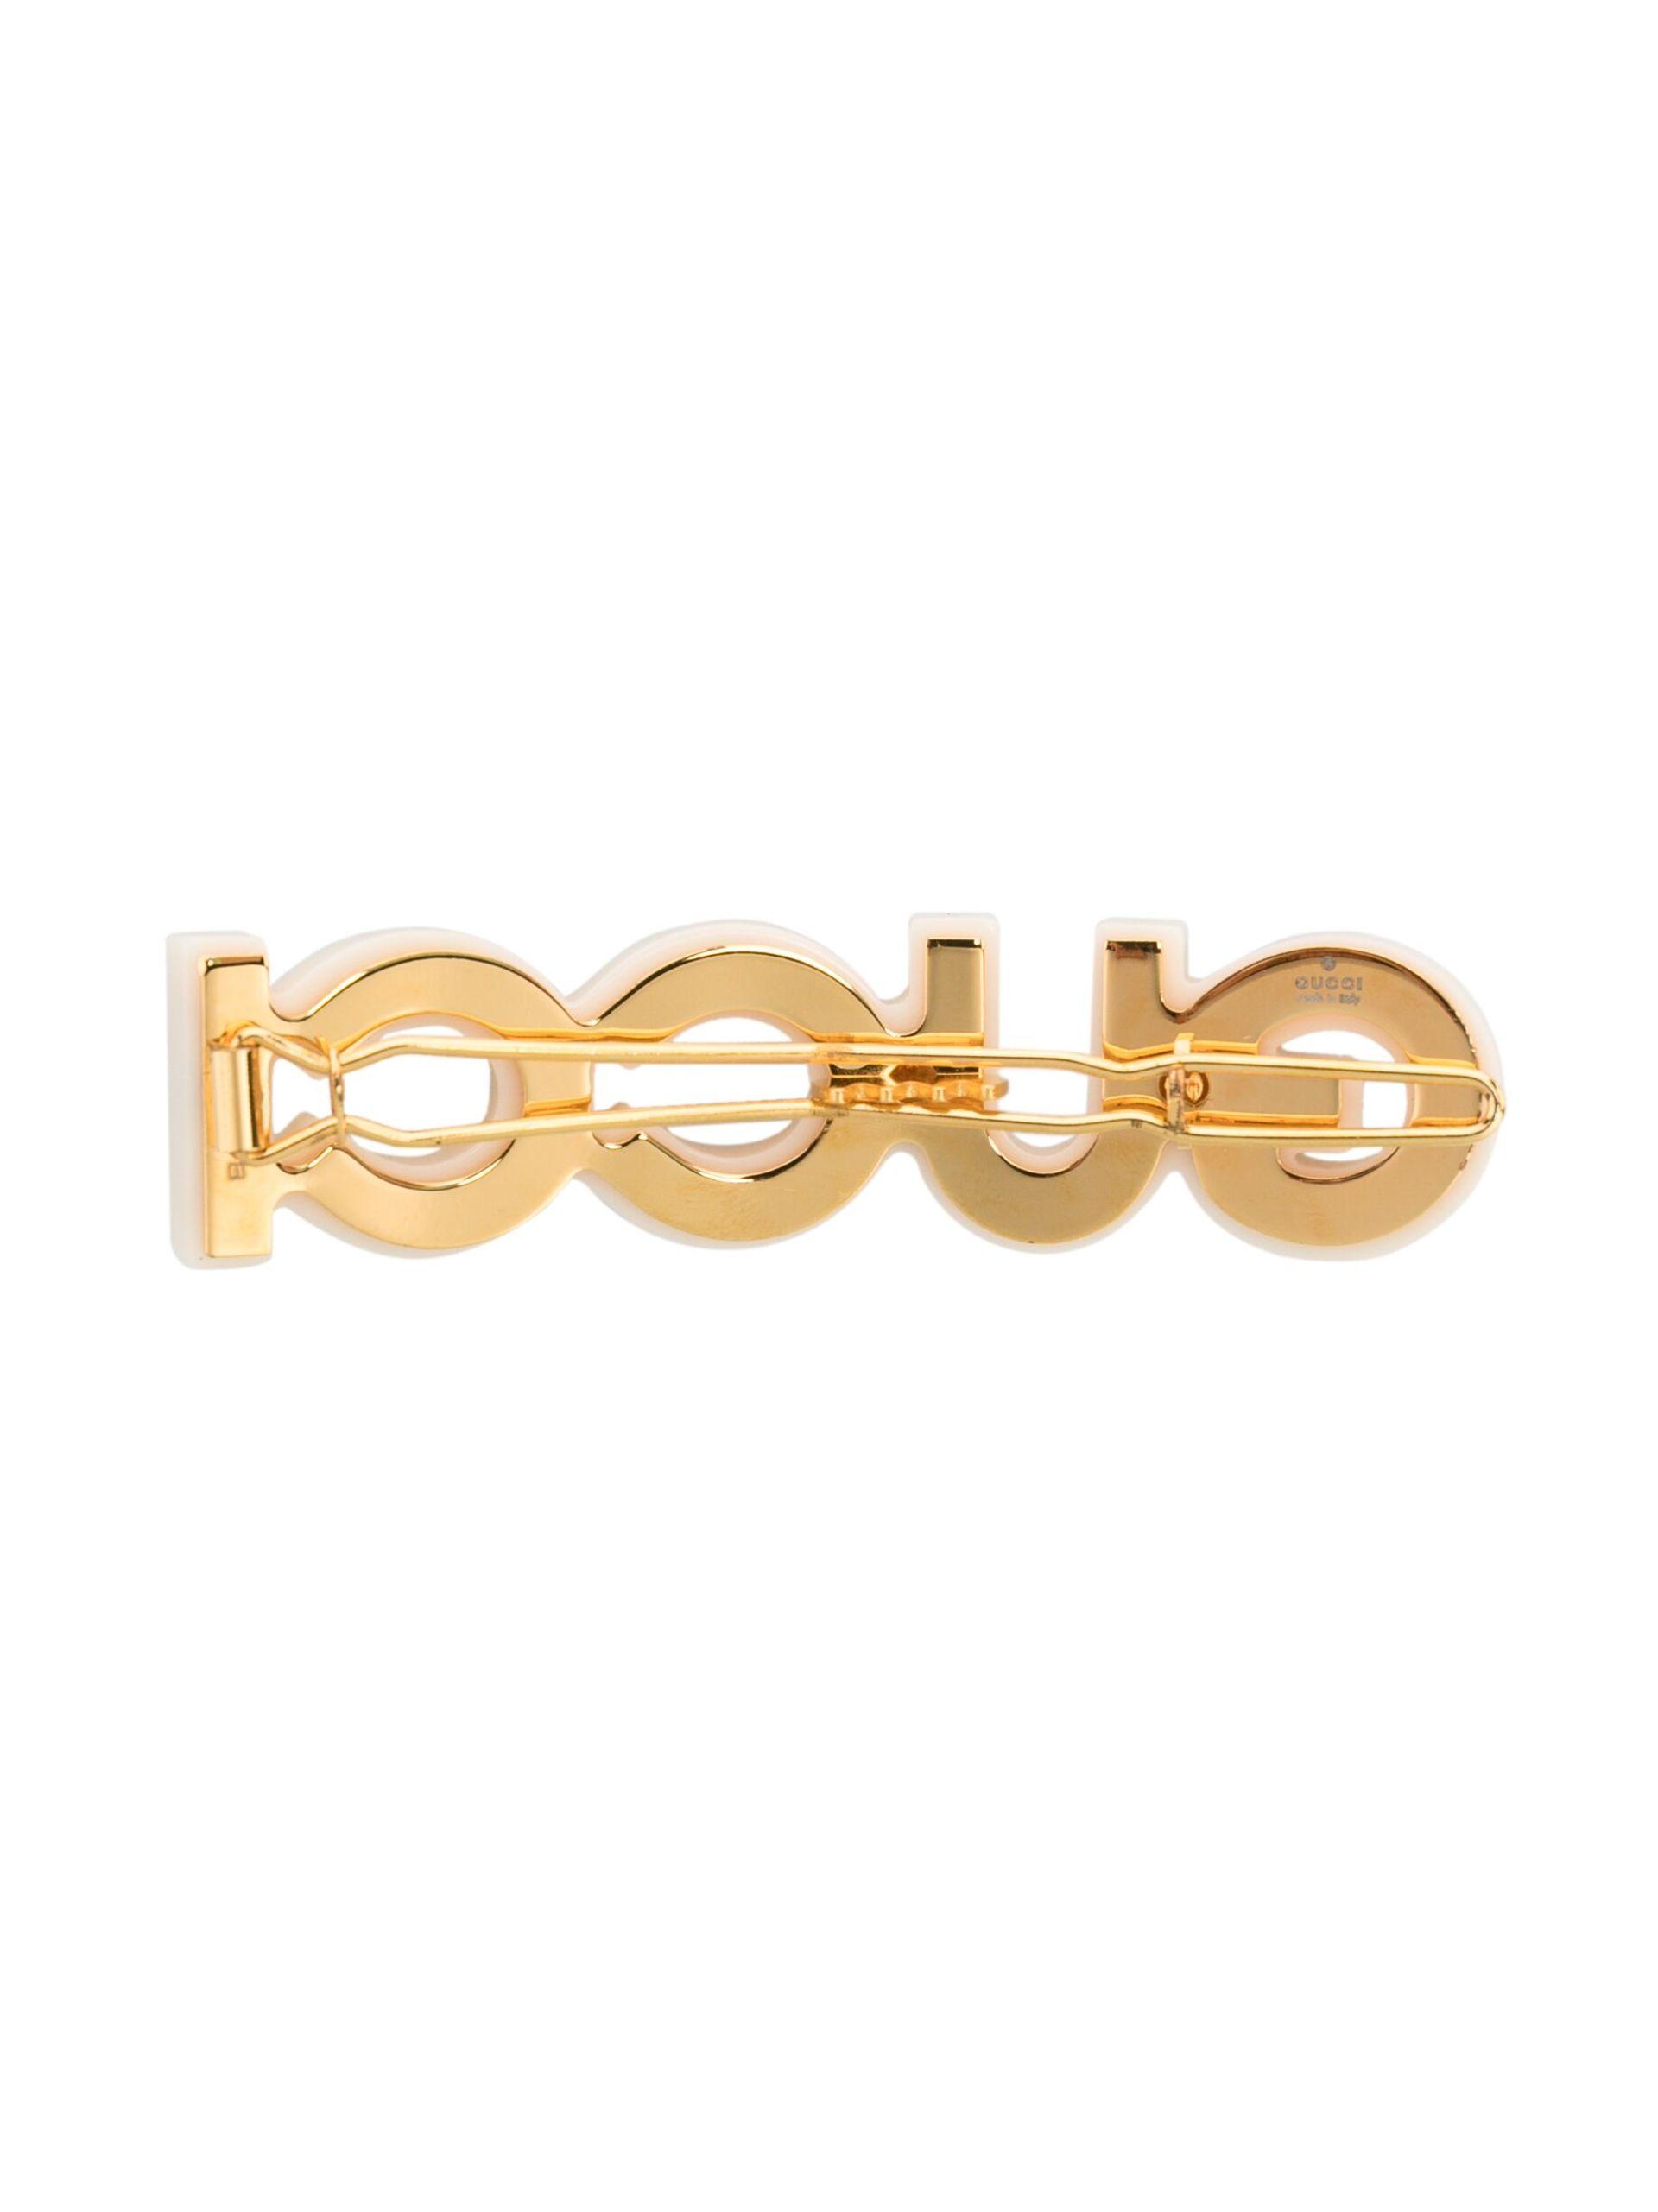 Gucci Script Brass Hair Clip In Gold,crystal